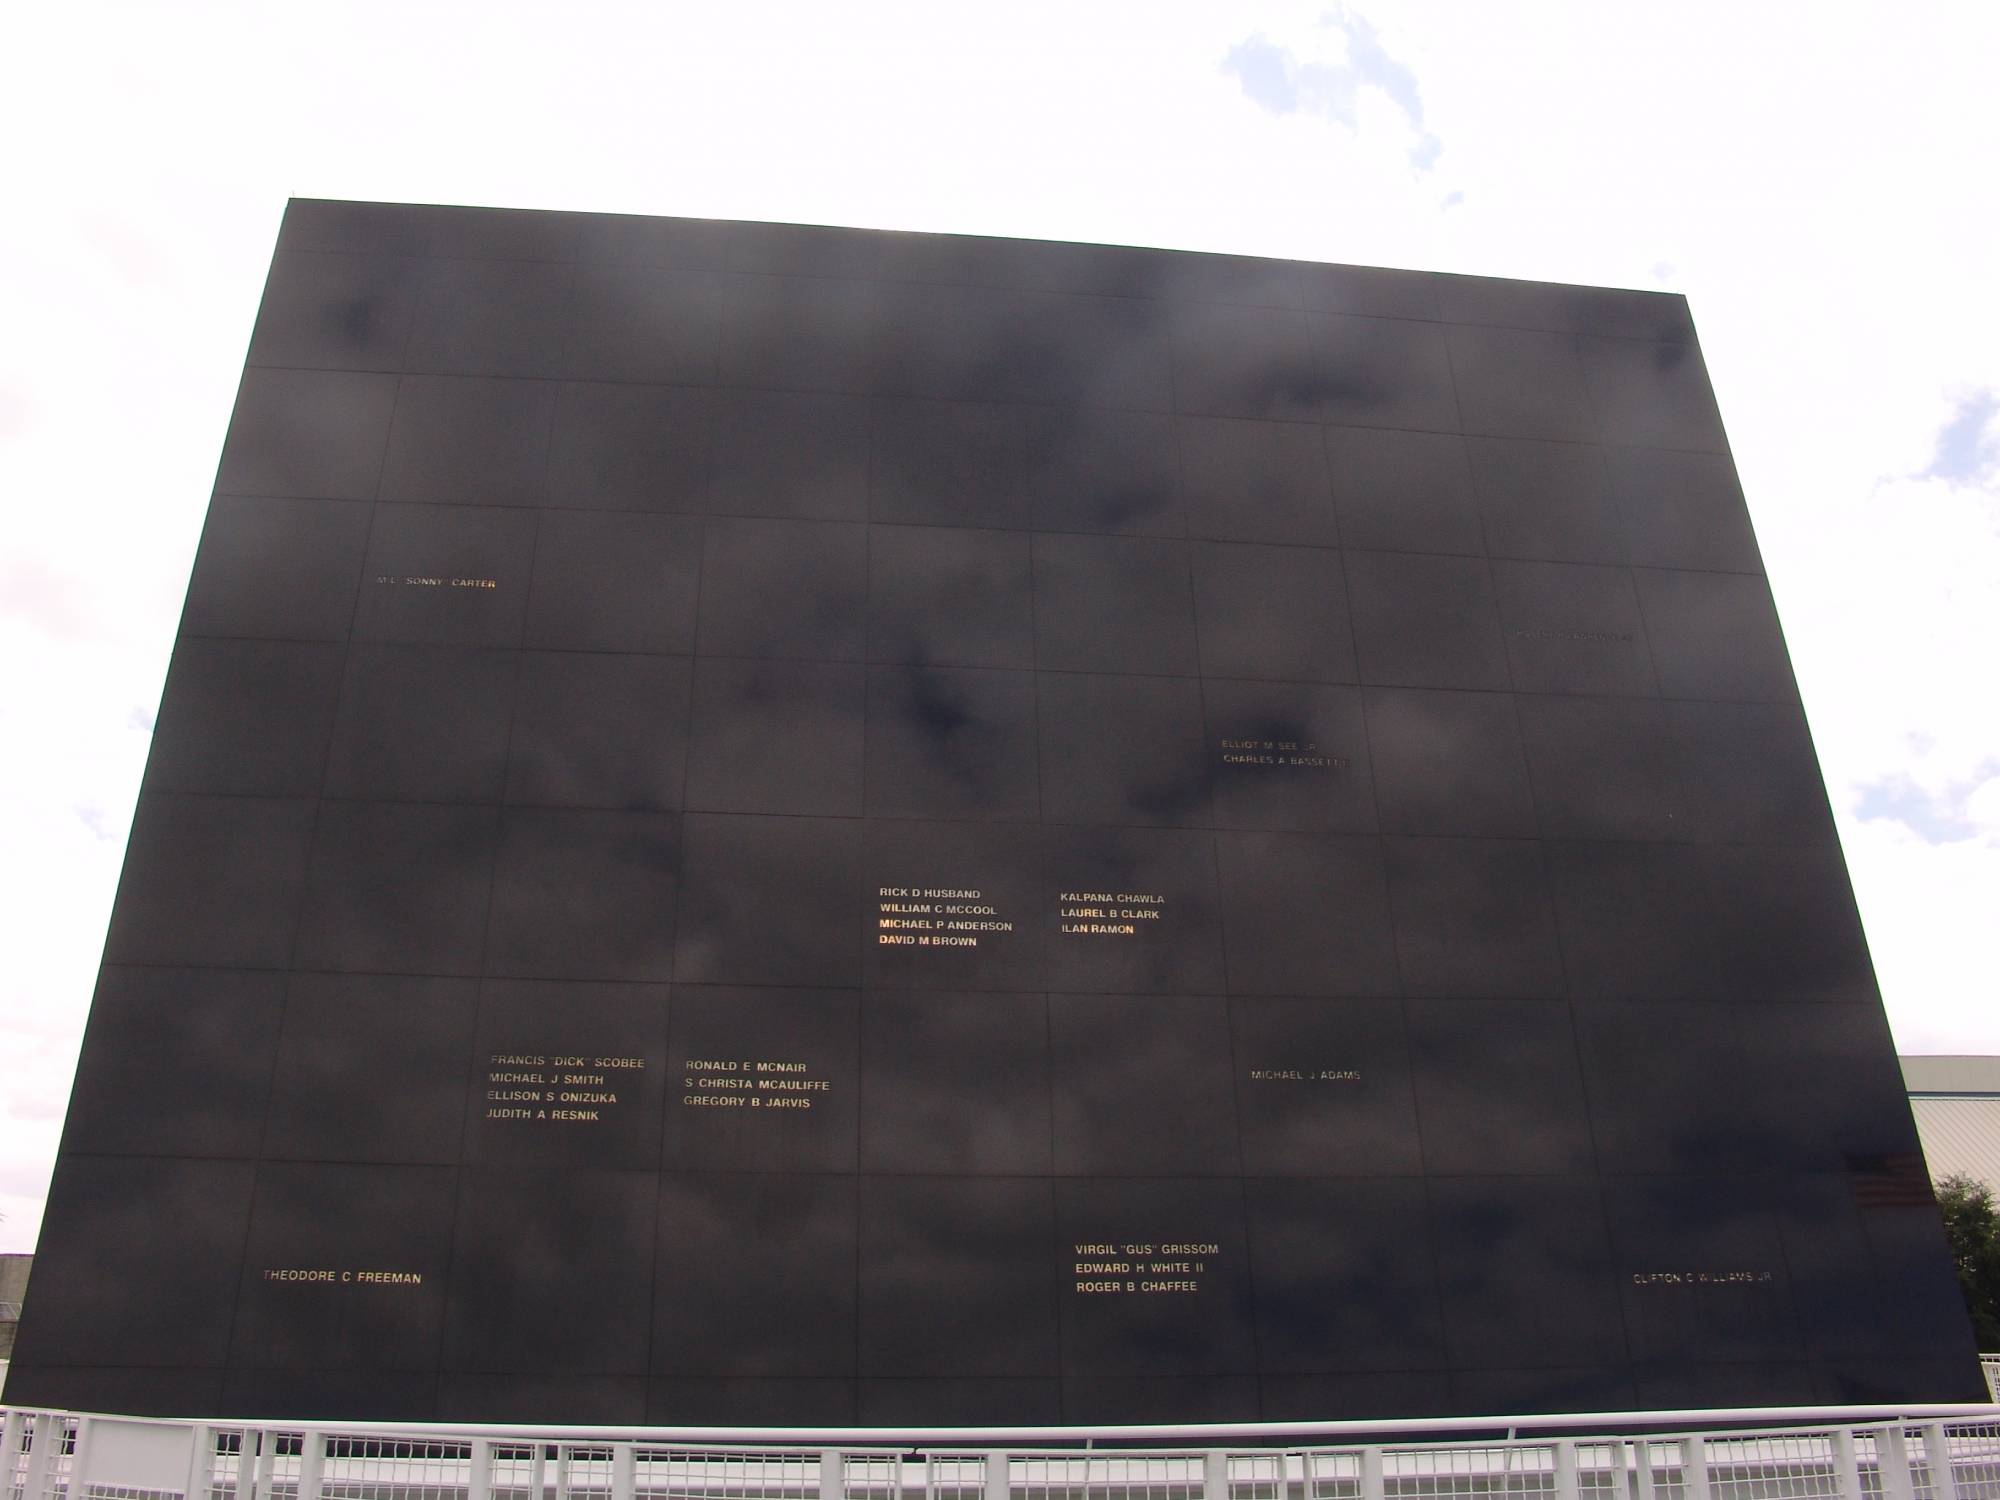 Kennedy Space Center - Astronaut Memorial